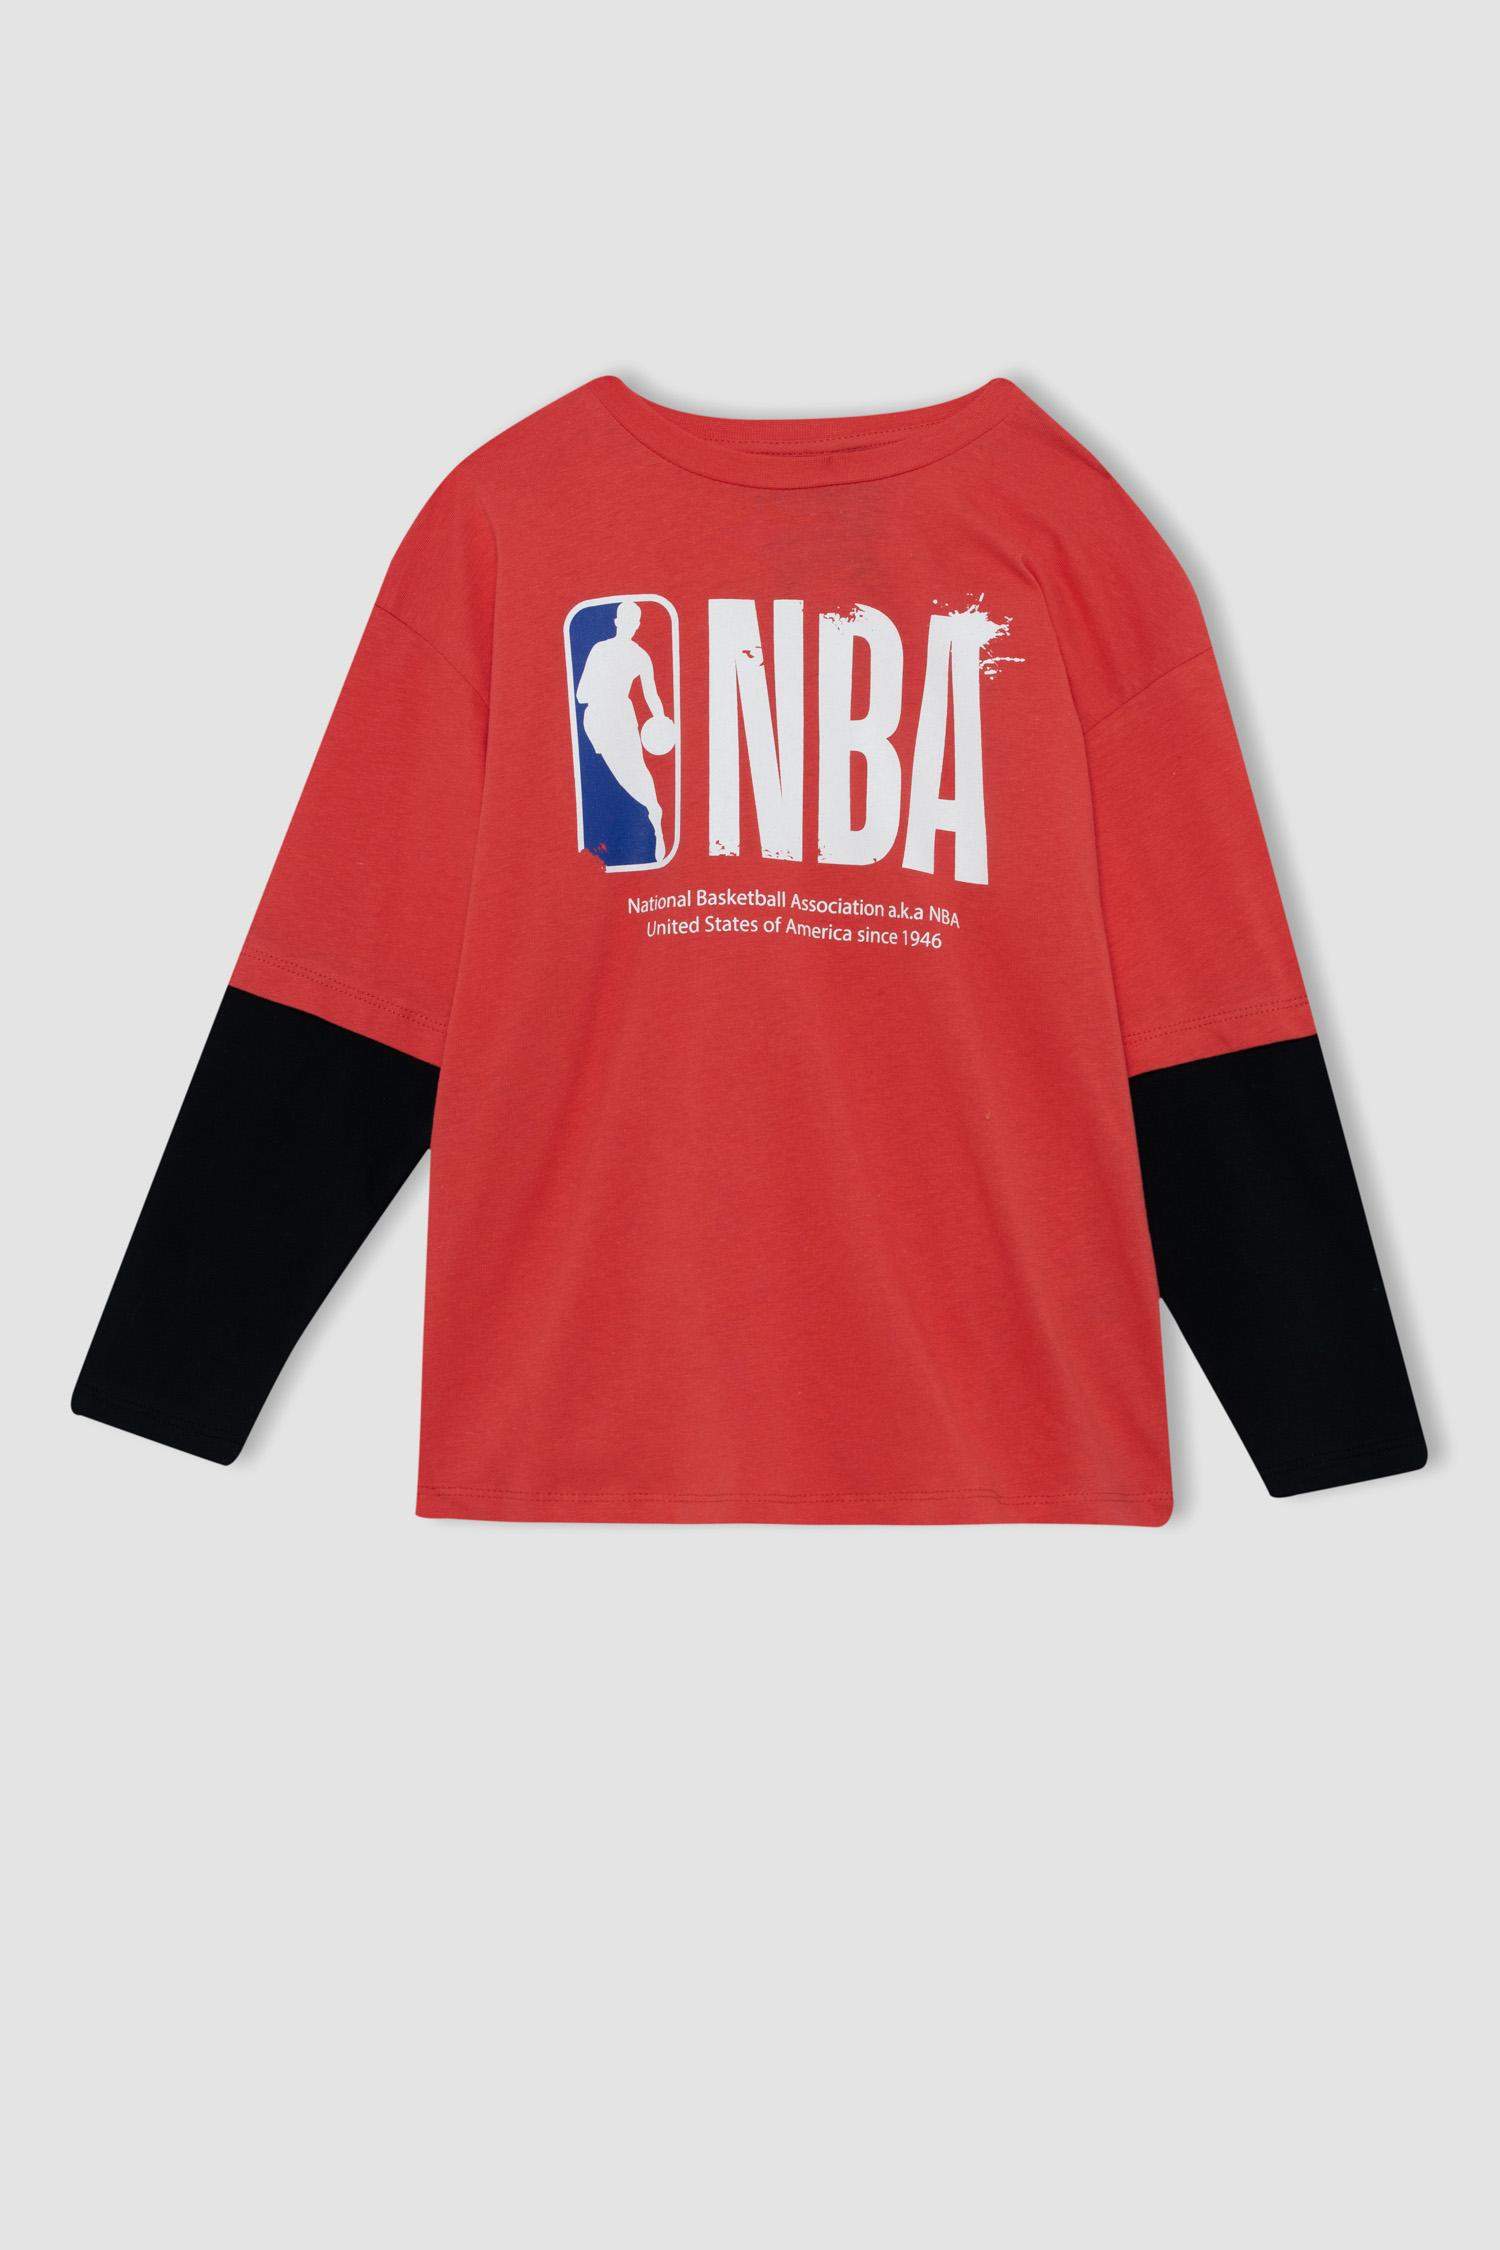 Bam Ado T-Shirt #13 Bam Ado Basketball Tee Shirt Short Sleeve  Vintage Graphic Tee Shirt - AliExpress